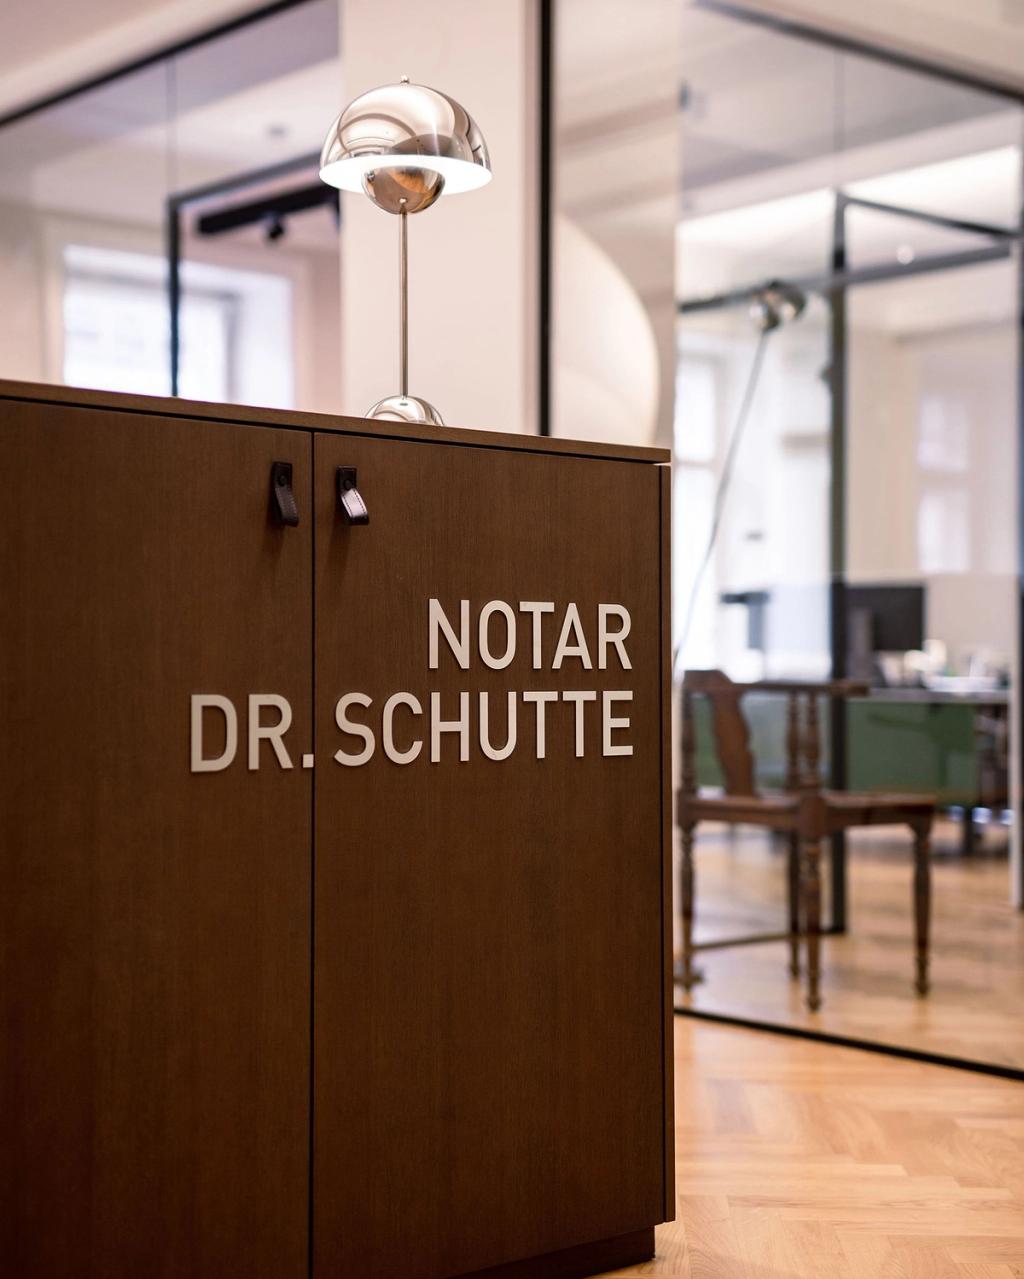 Notar Office Design in Warm Tones